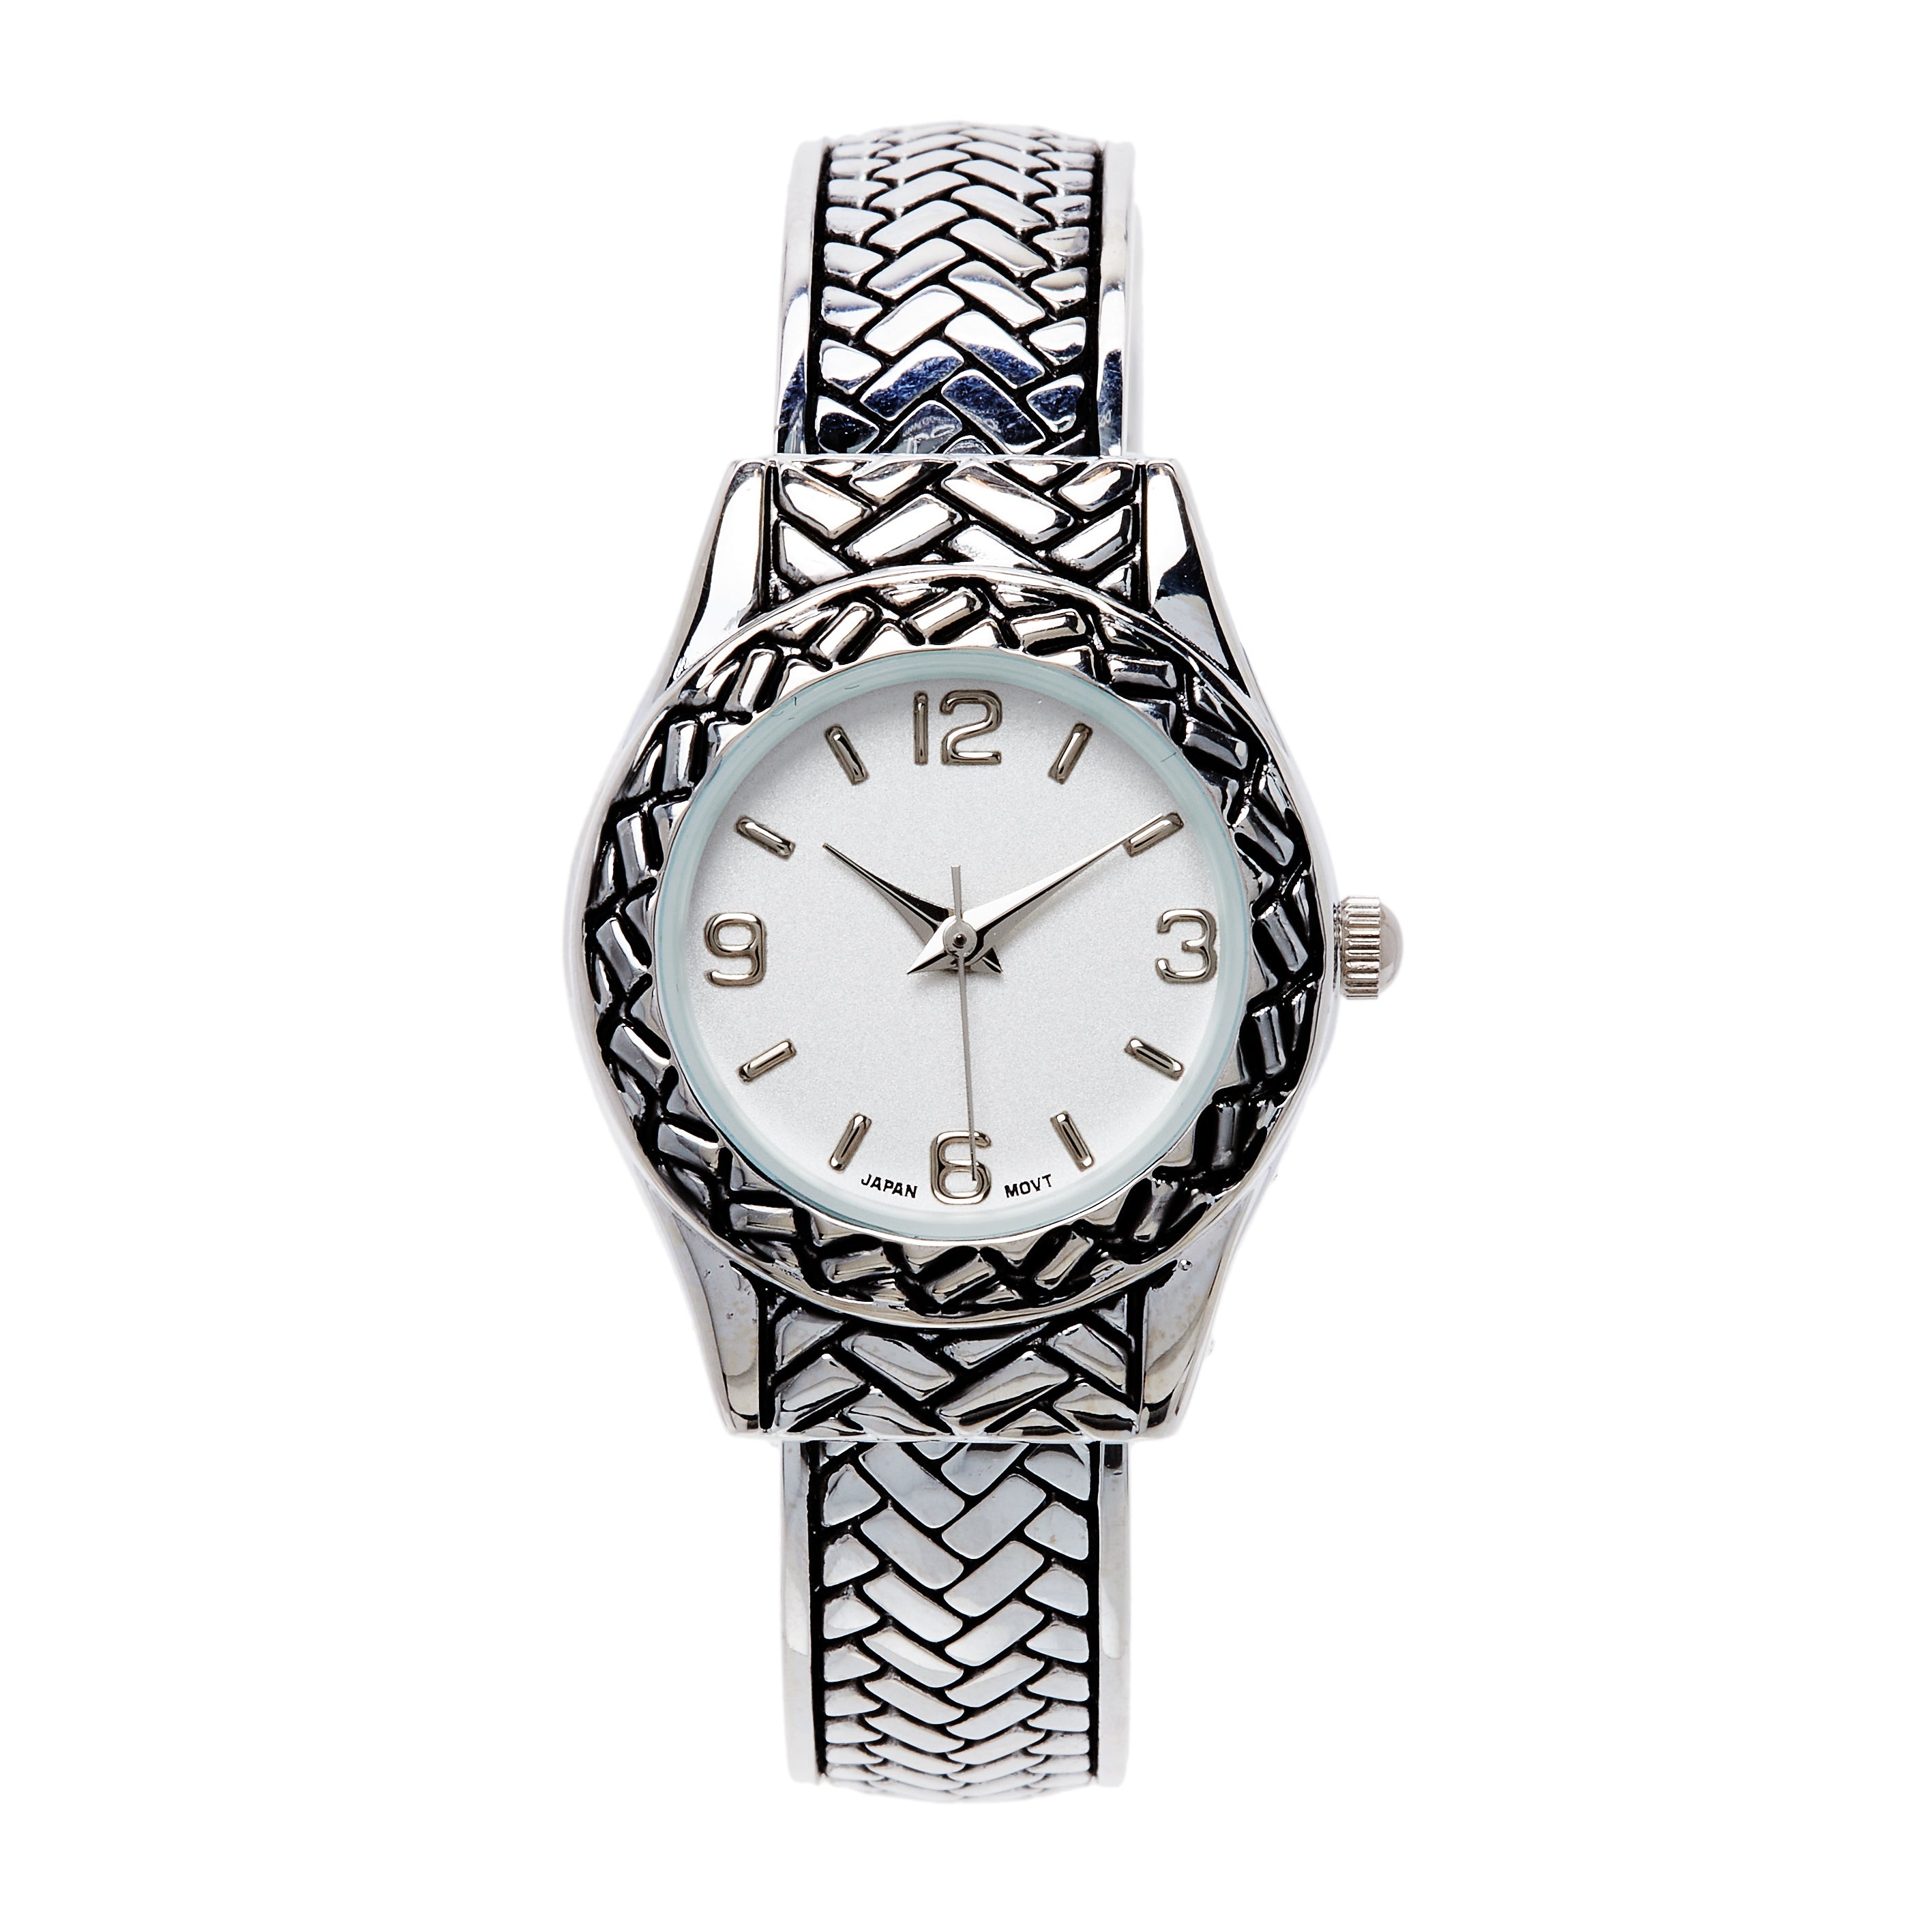 Buy Vintage Cuff Bracelet Quartz Watch / Diamond Cuff Dress Watch / Womens  Watches / Ice / Gift for Her Online in India - Etsy